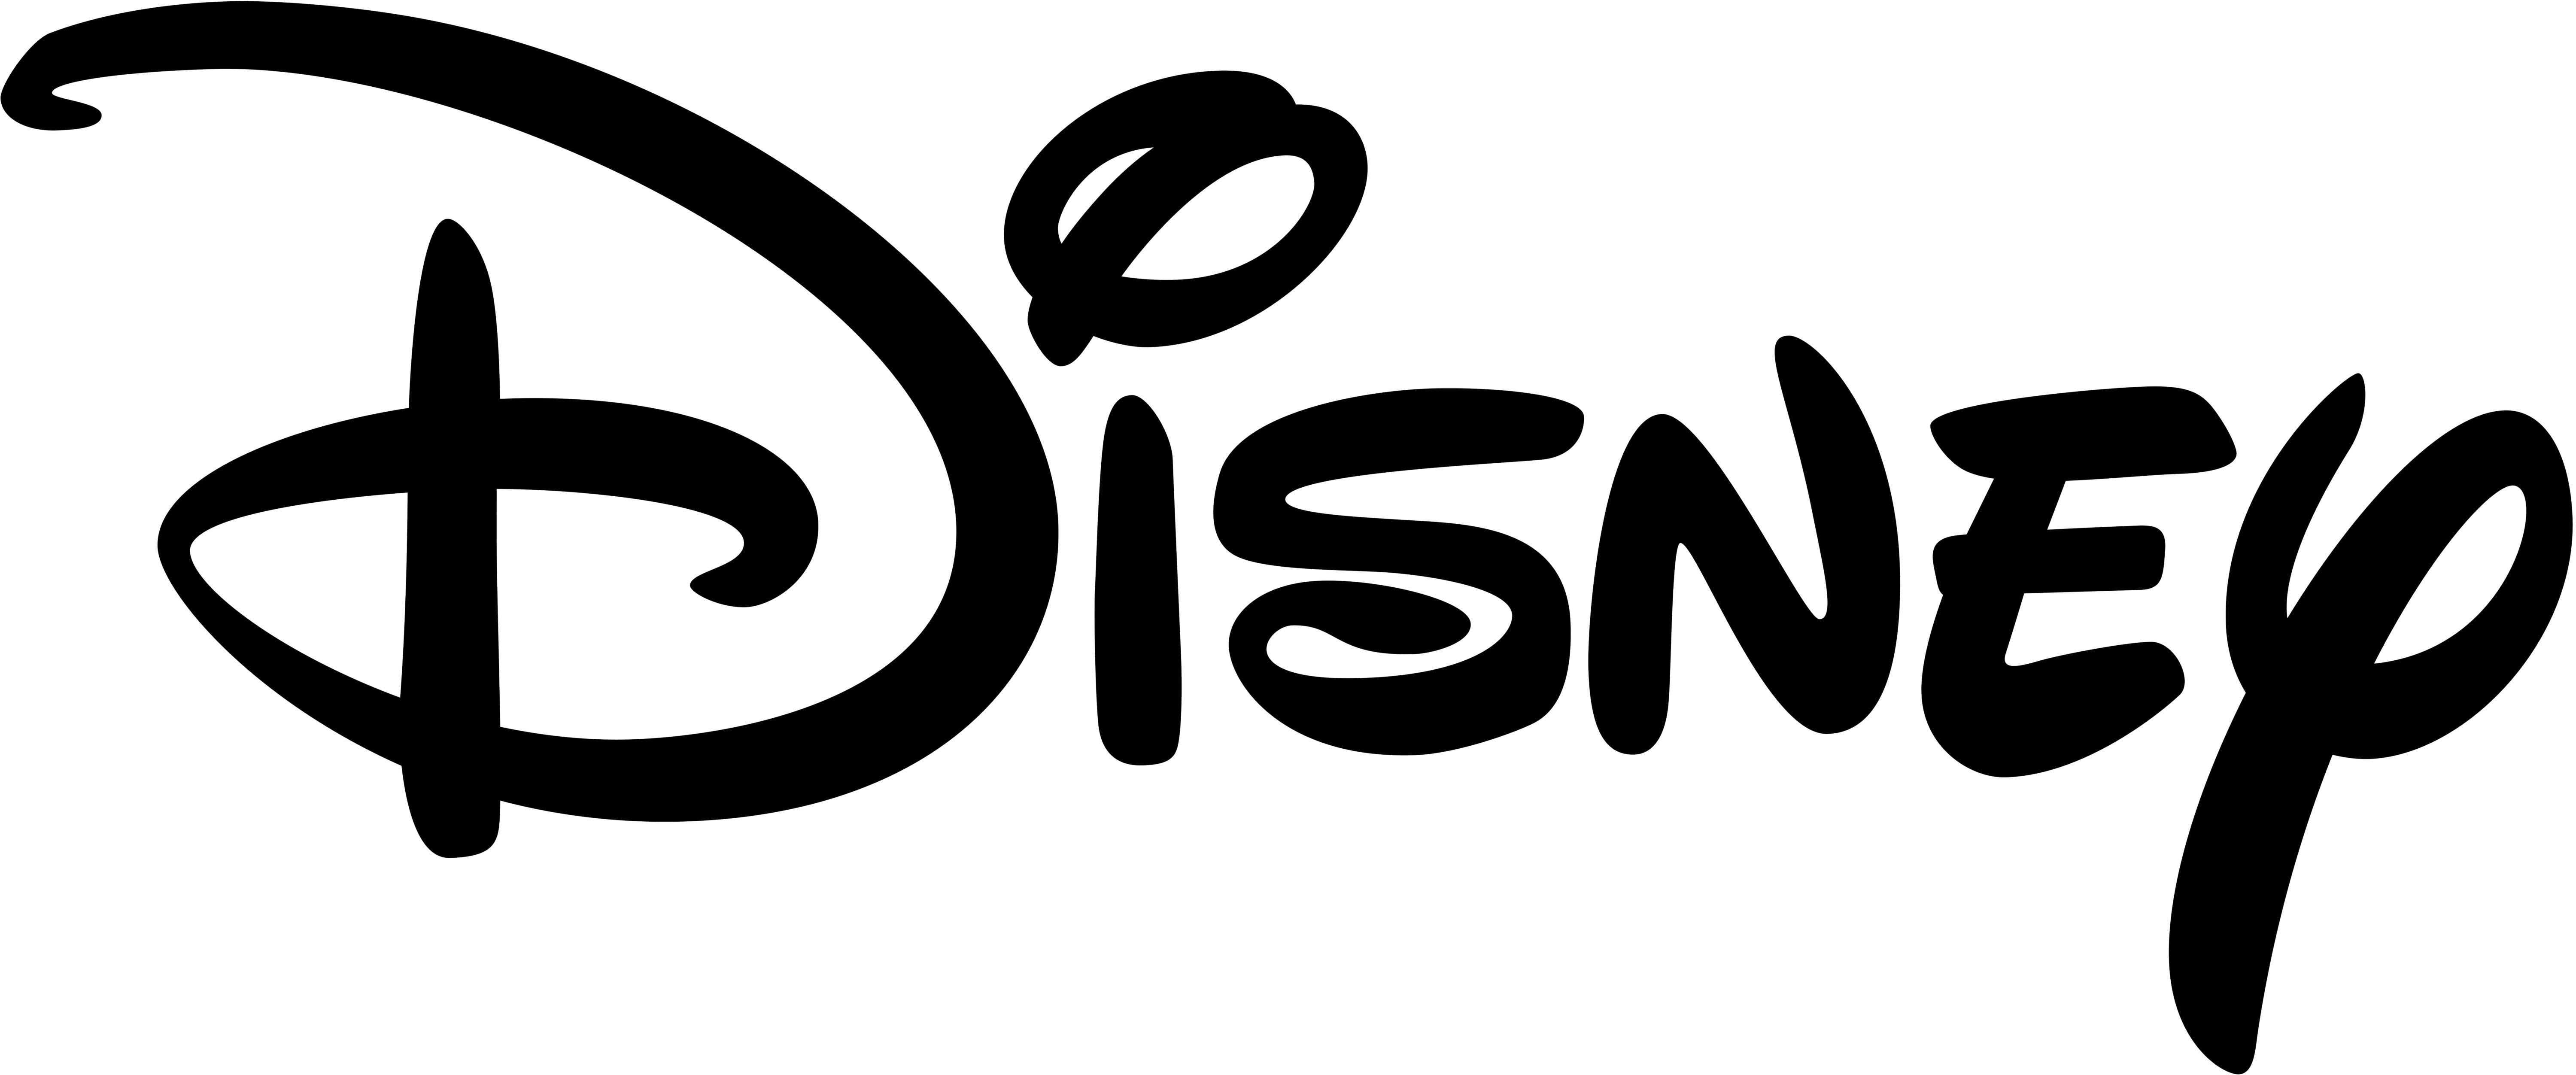 Maker Studios Logo - Disney Is Scaling Down On Digital Media Team, Maker Studios. Video